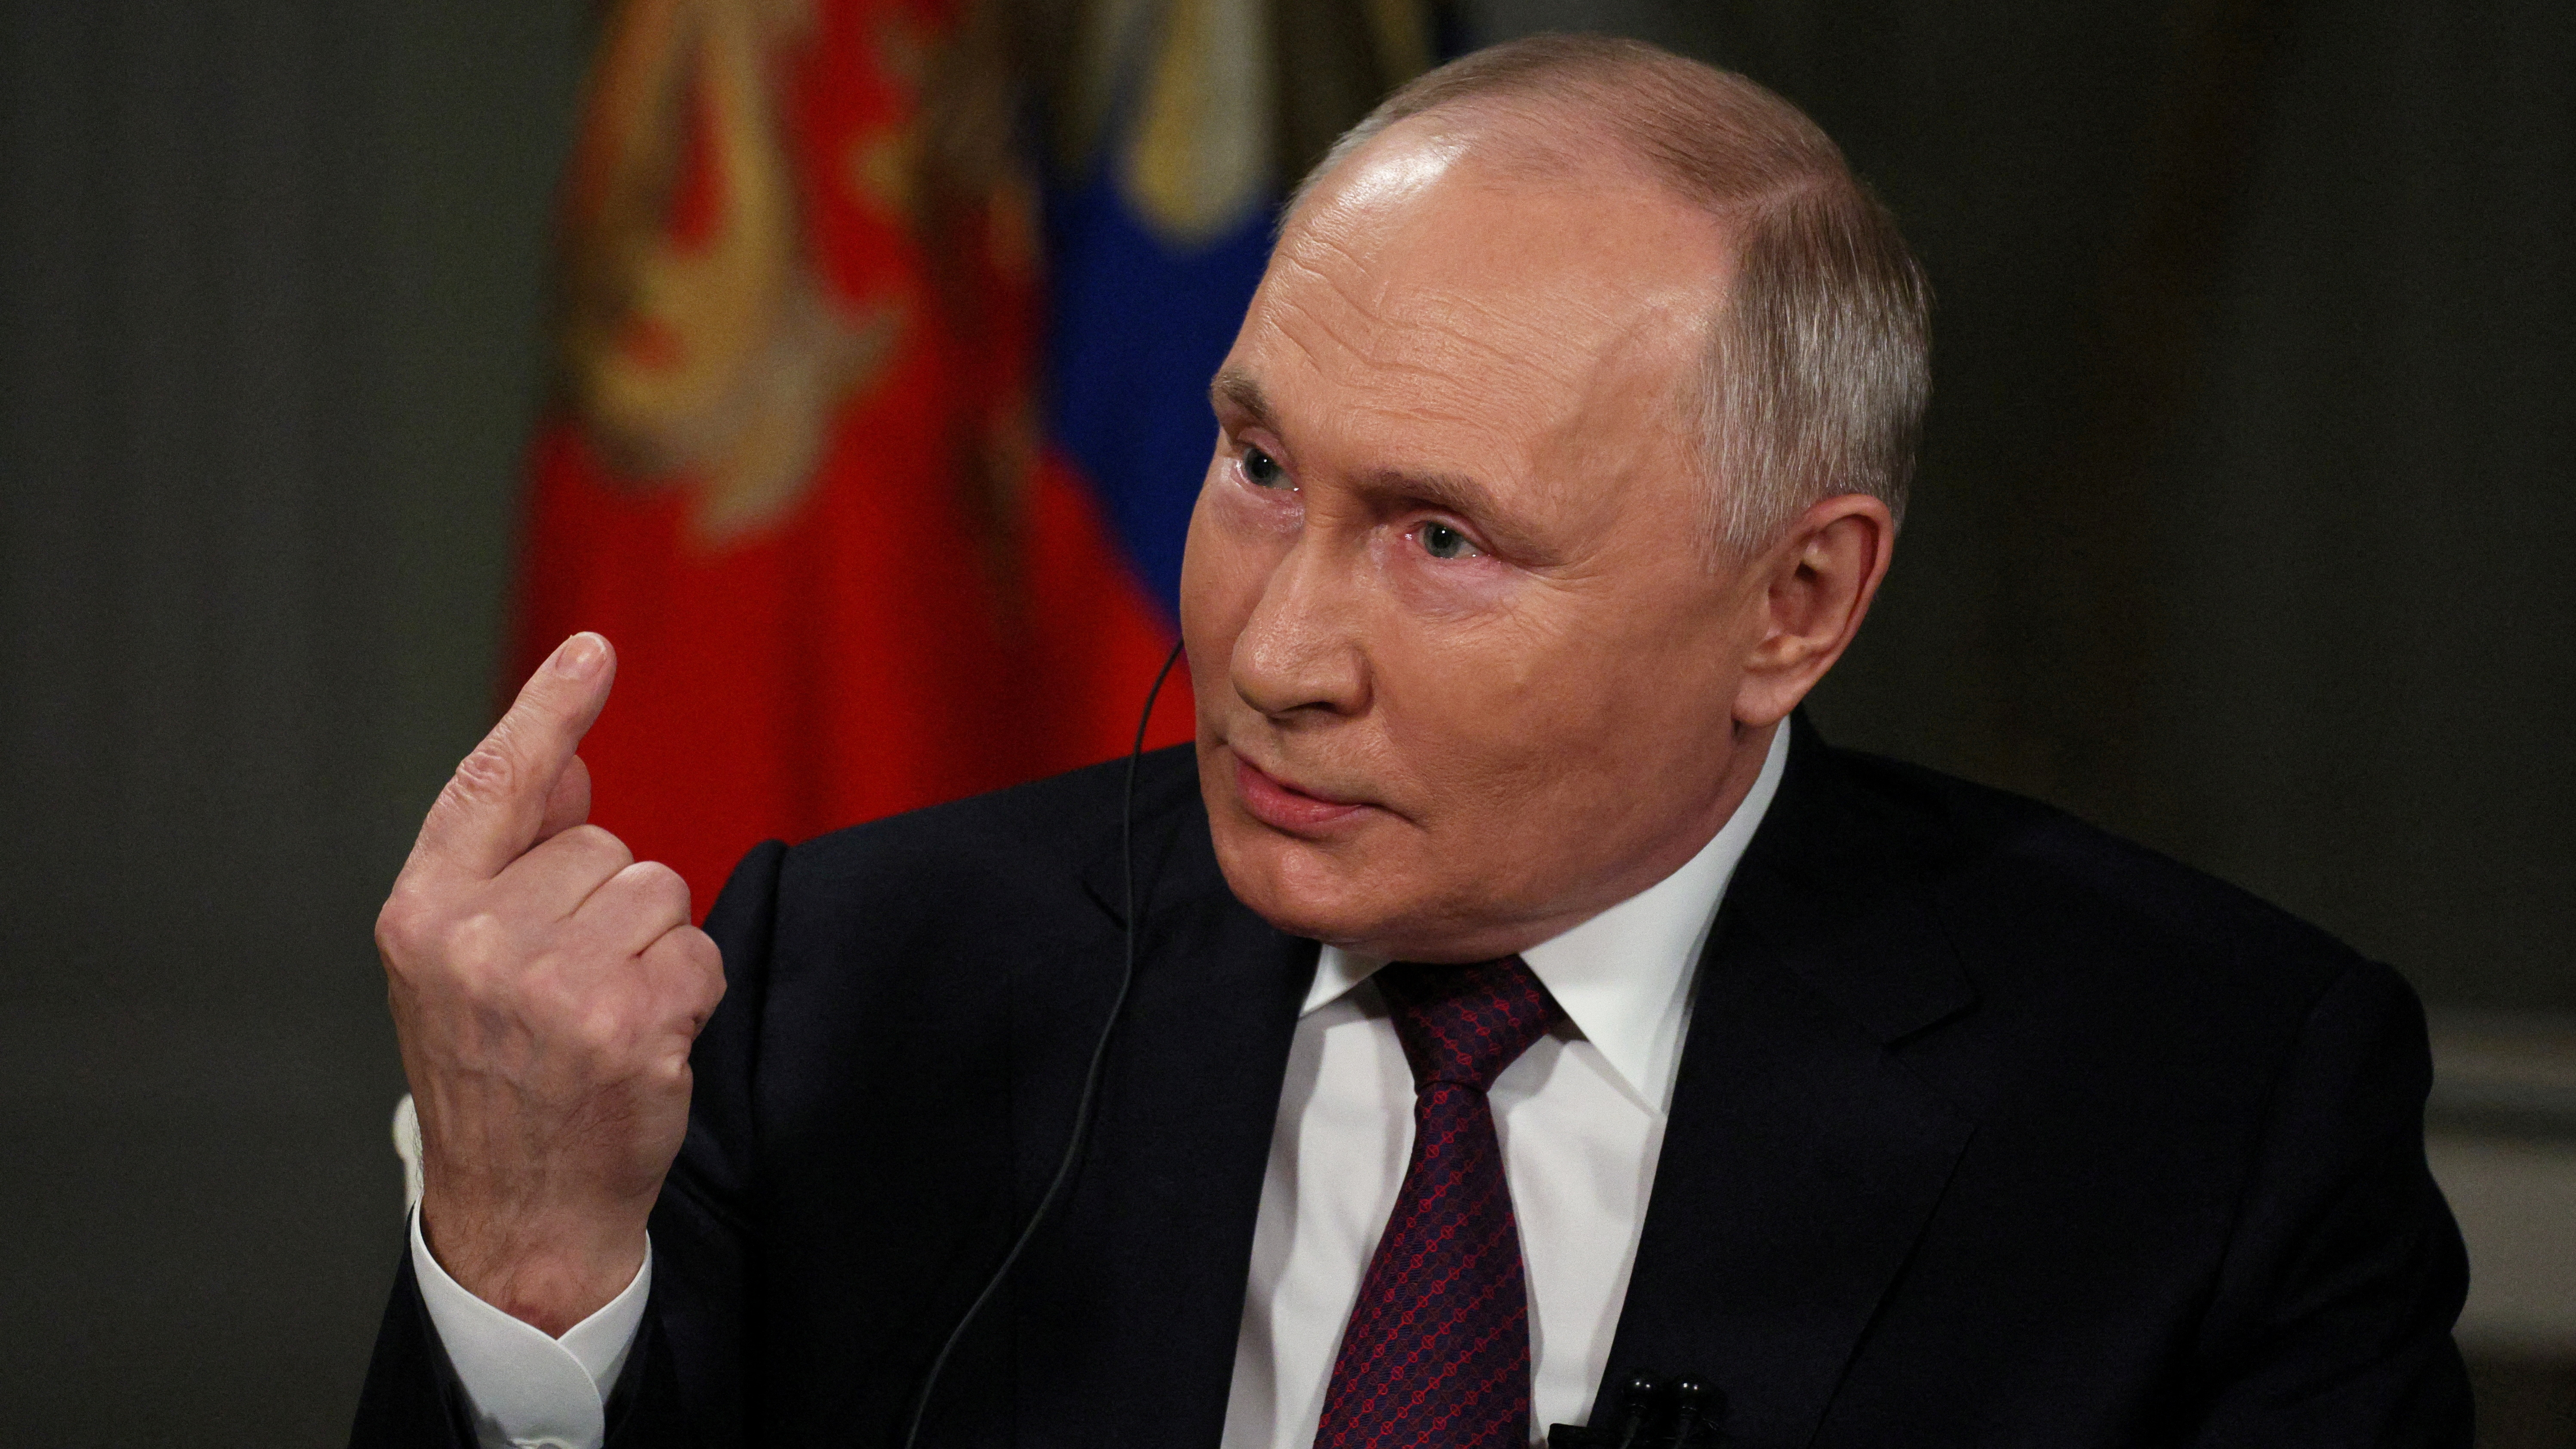 Russian President Vladimir Putin speaks during an interview with U.S. television host Tucker Carlson in Moscow. Sputnik/Gavriil Grigorov/Kremlin via REUTERS